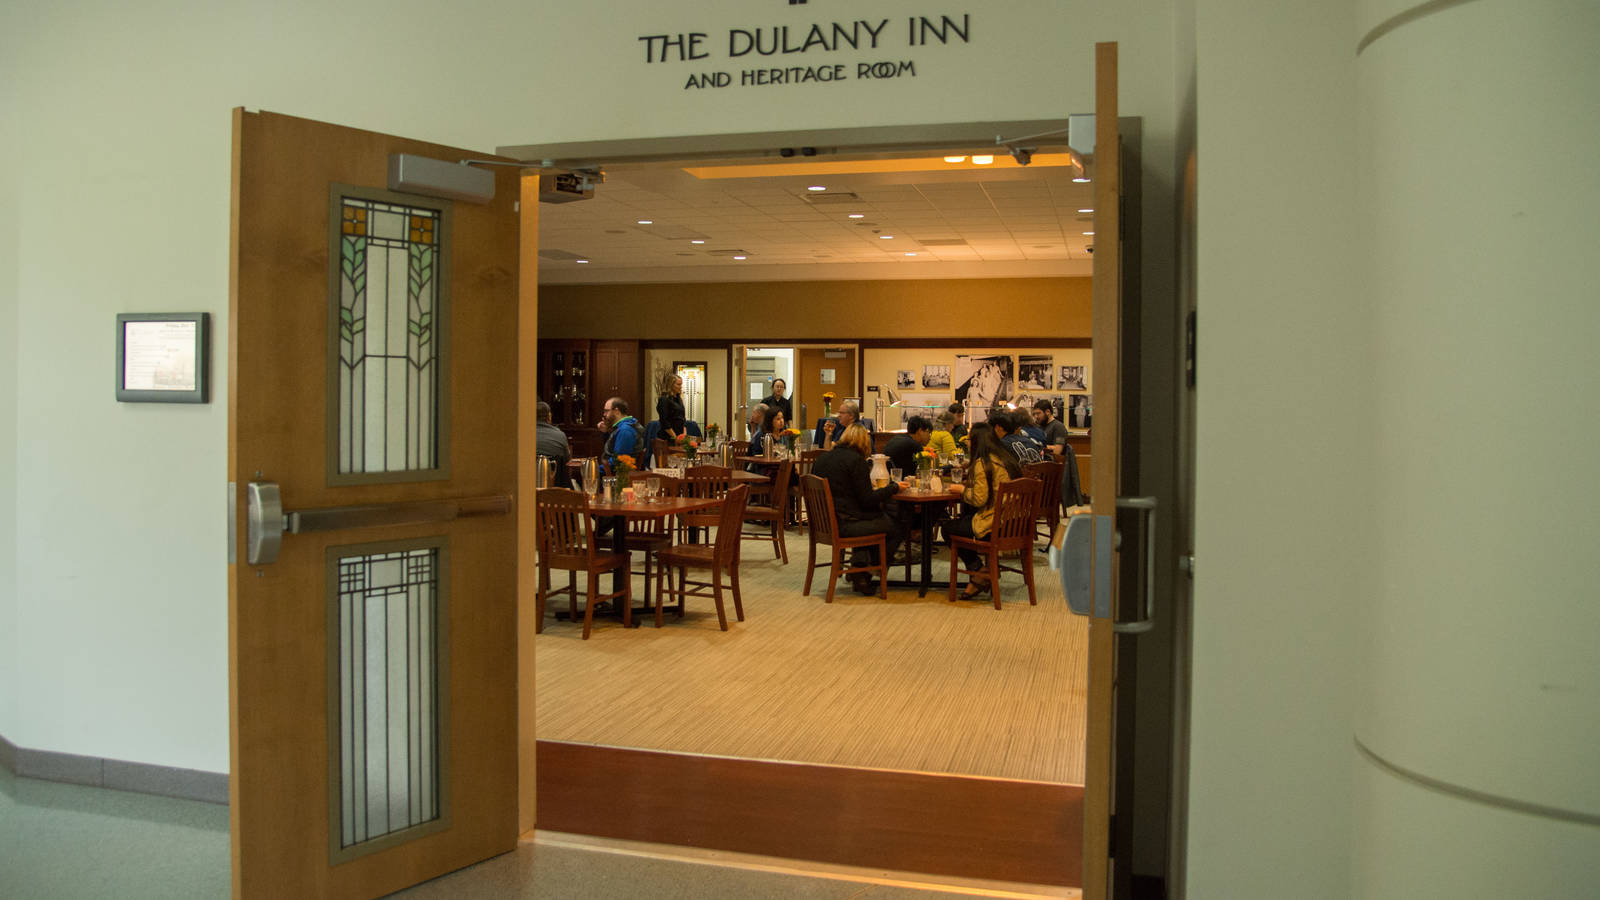 The Dulany Inn